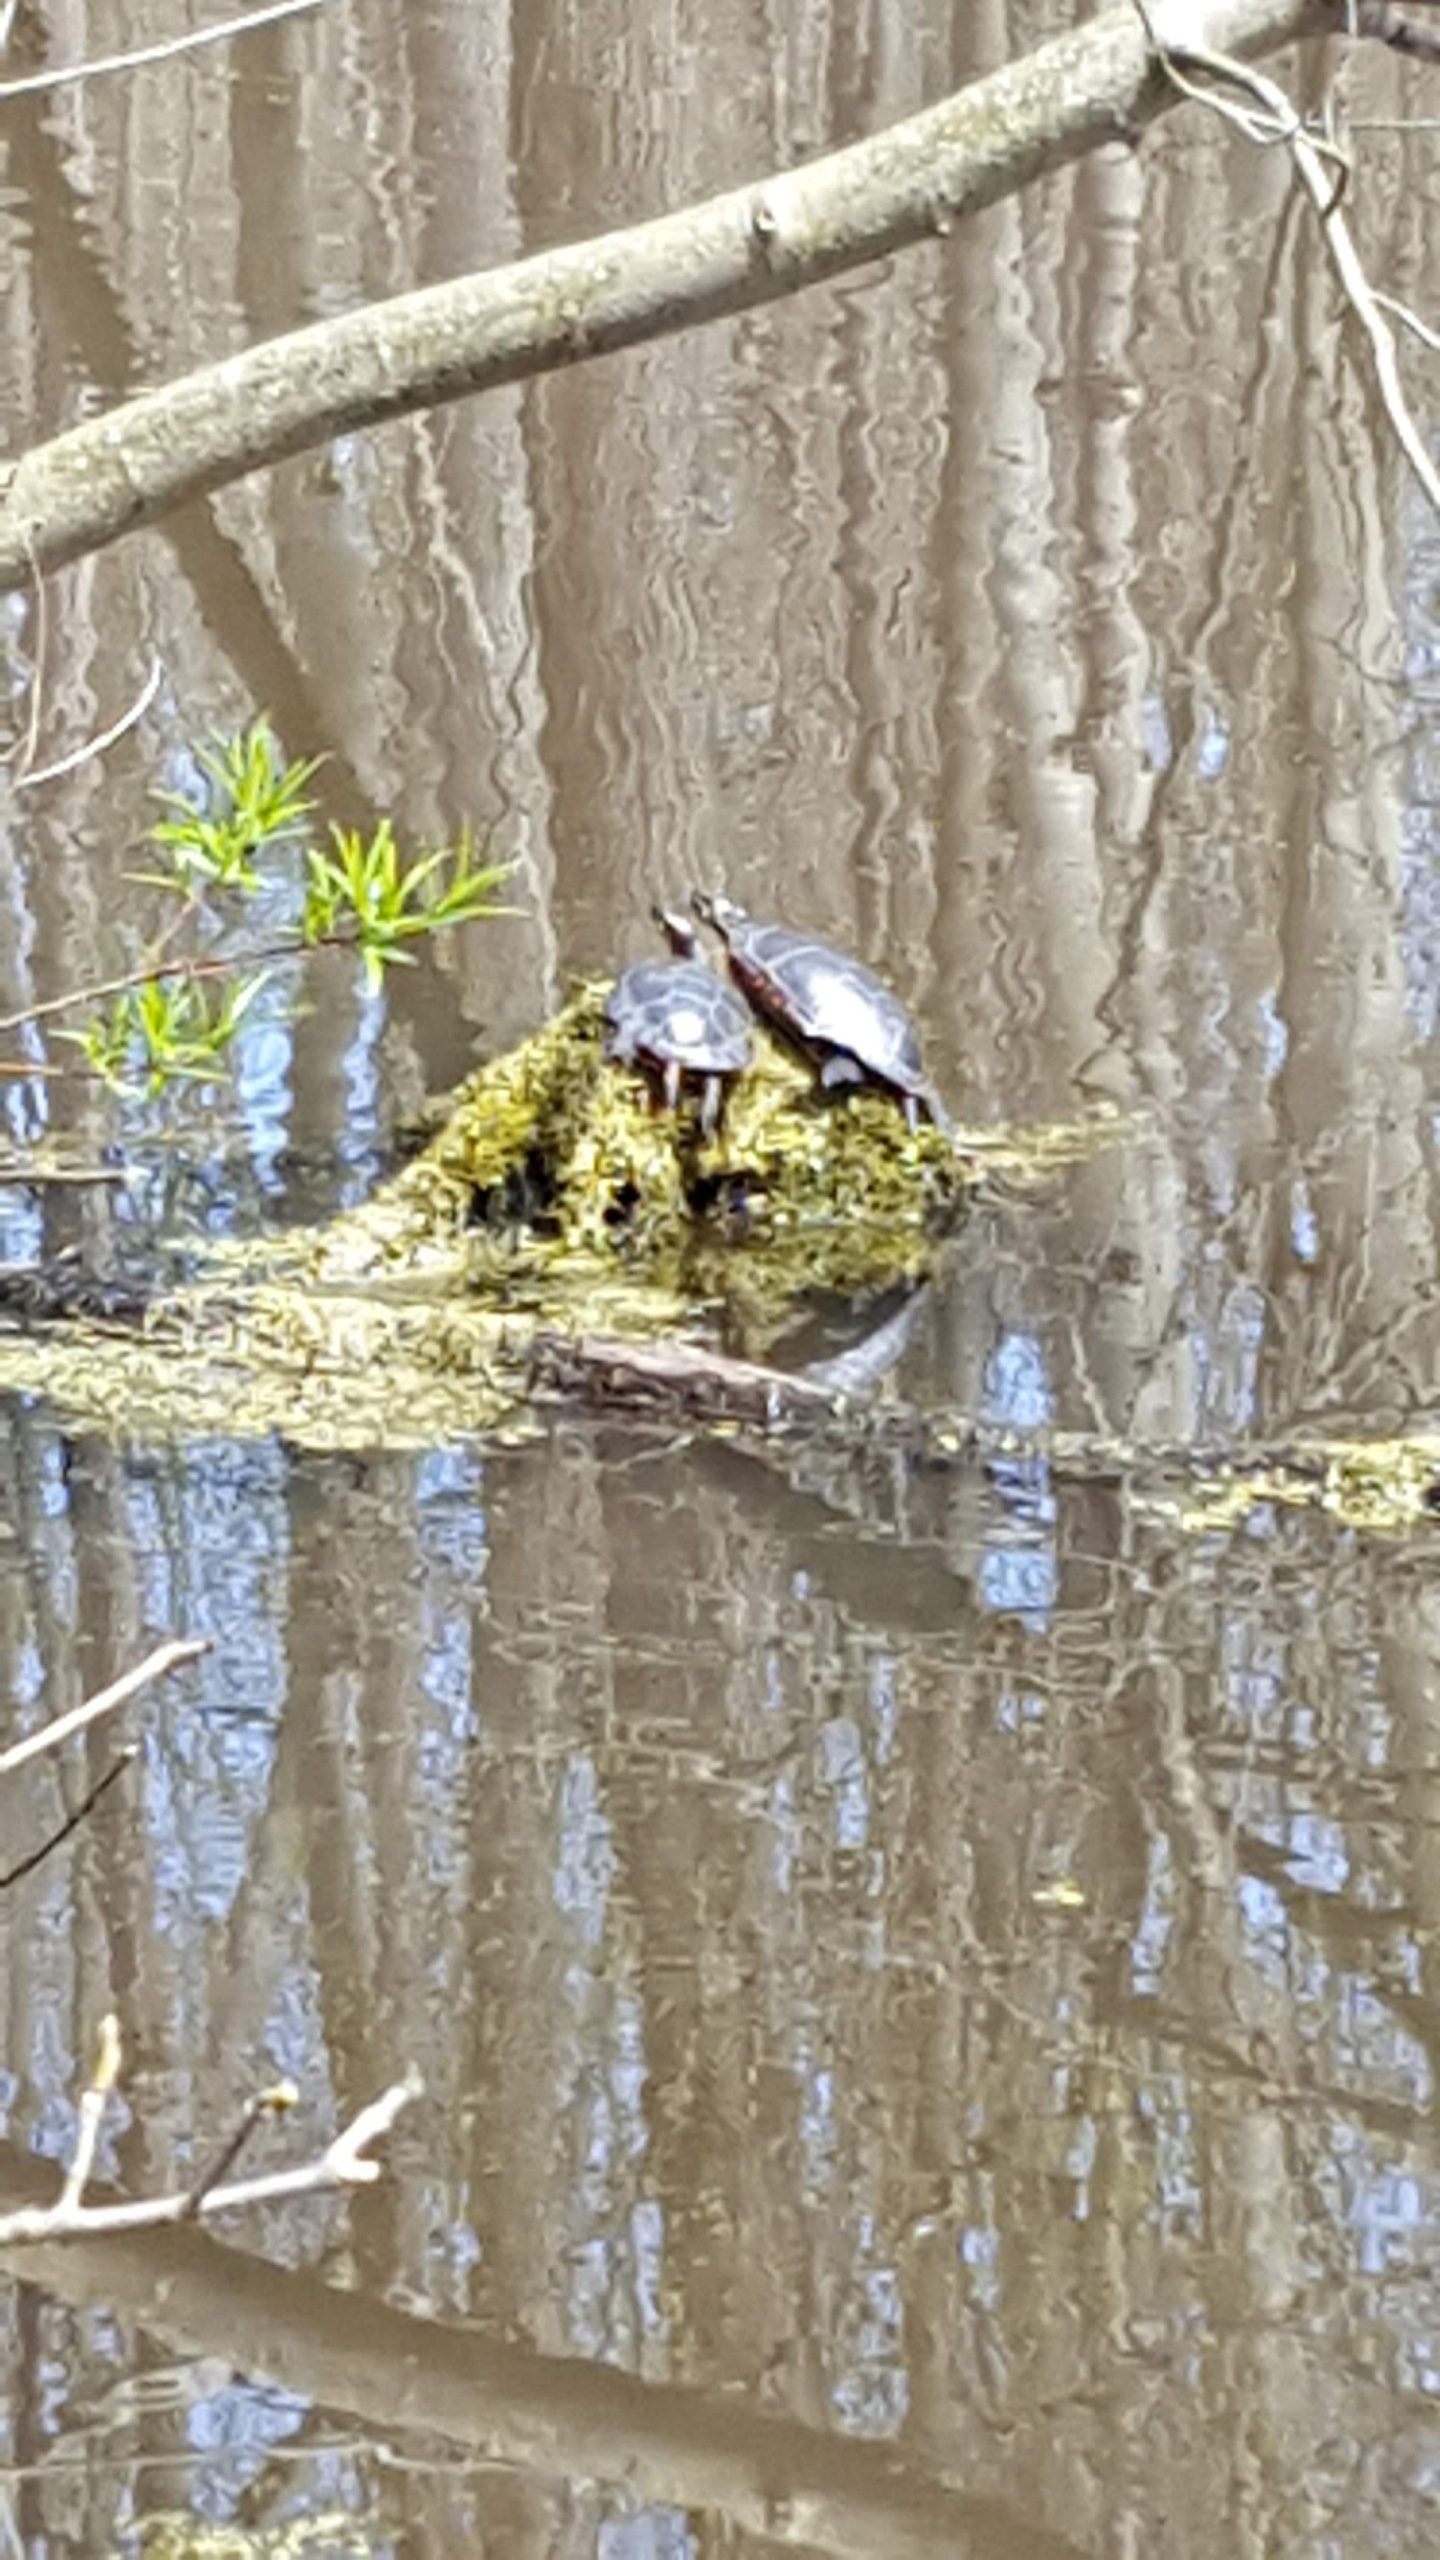 turtles sunbathing